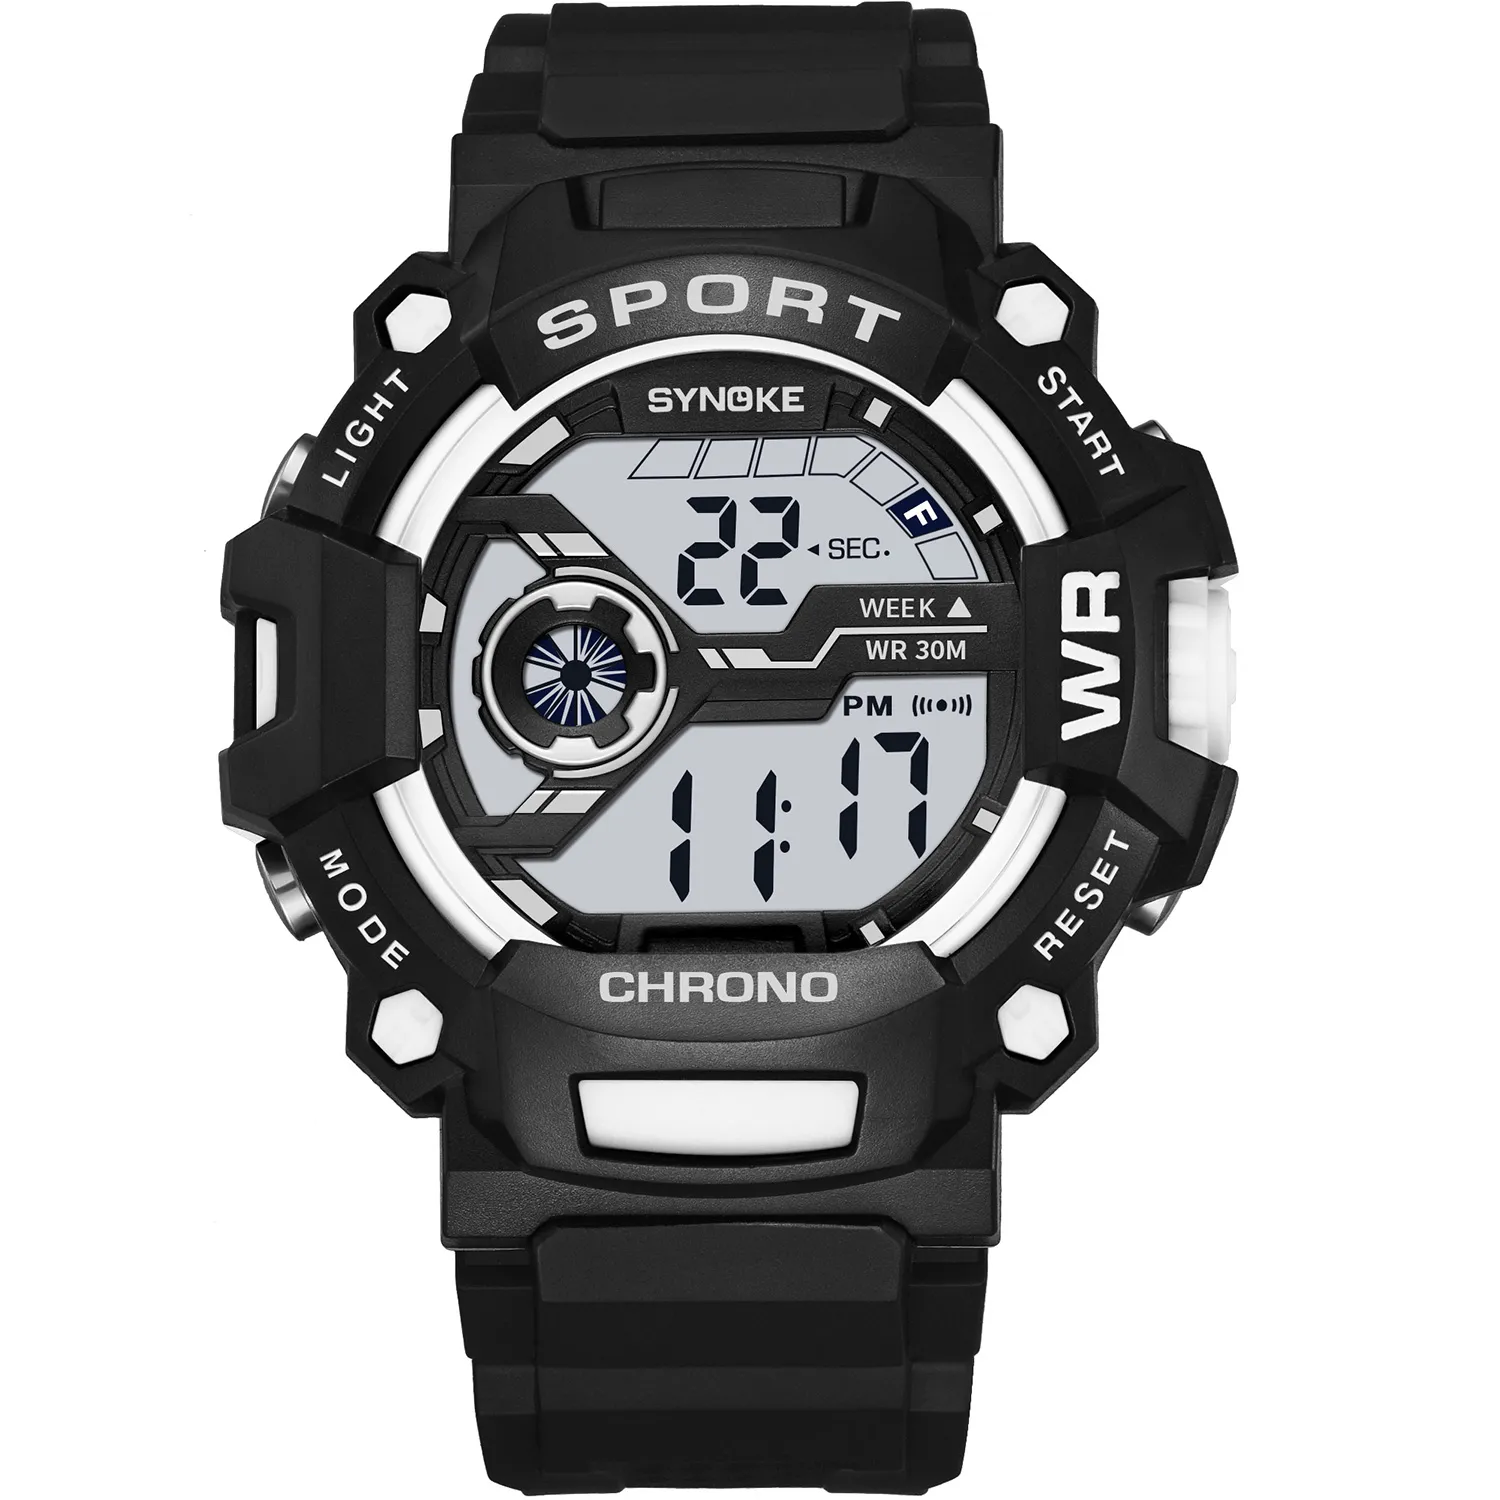 PANARS moda uomo orologio digitale impermeabile sport all'aria aperta orologi da polso sportivi orologio elettronico a LED uomo241b